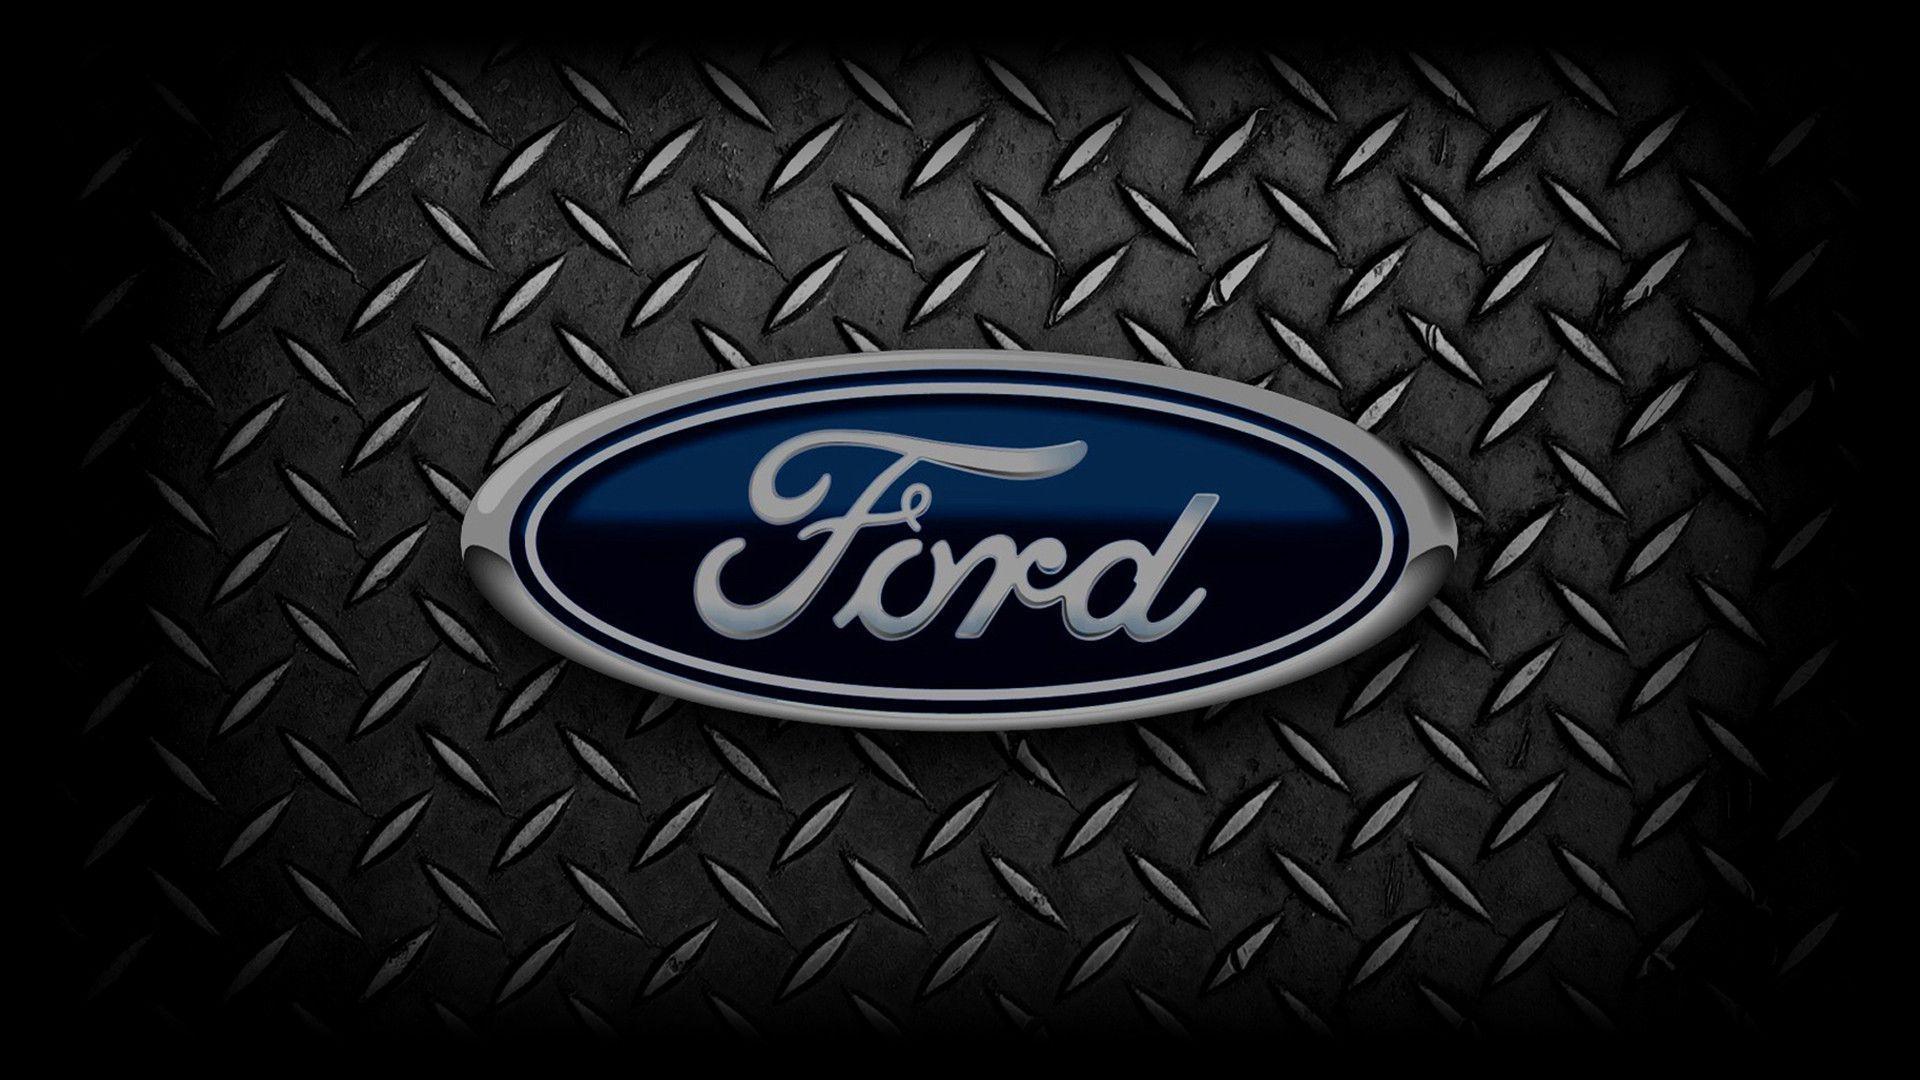 Fondos de pantalla de Ford - FondosMil